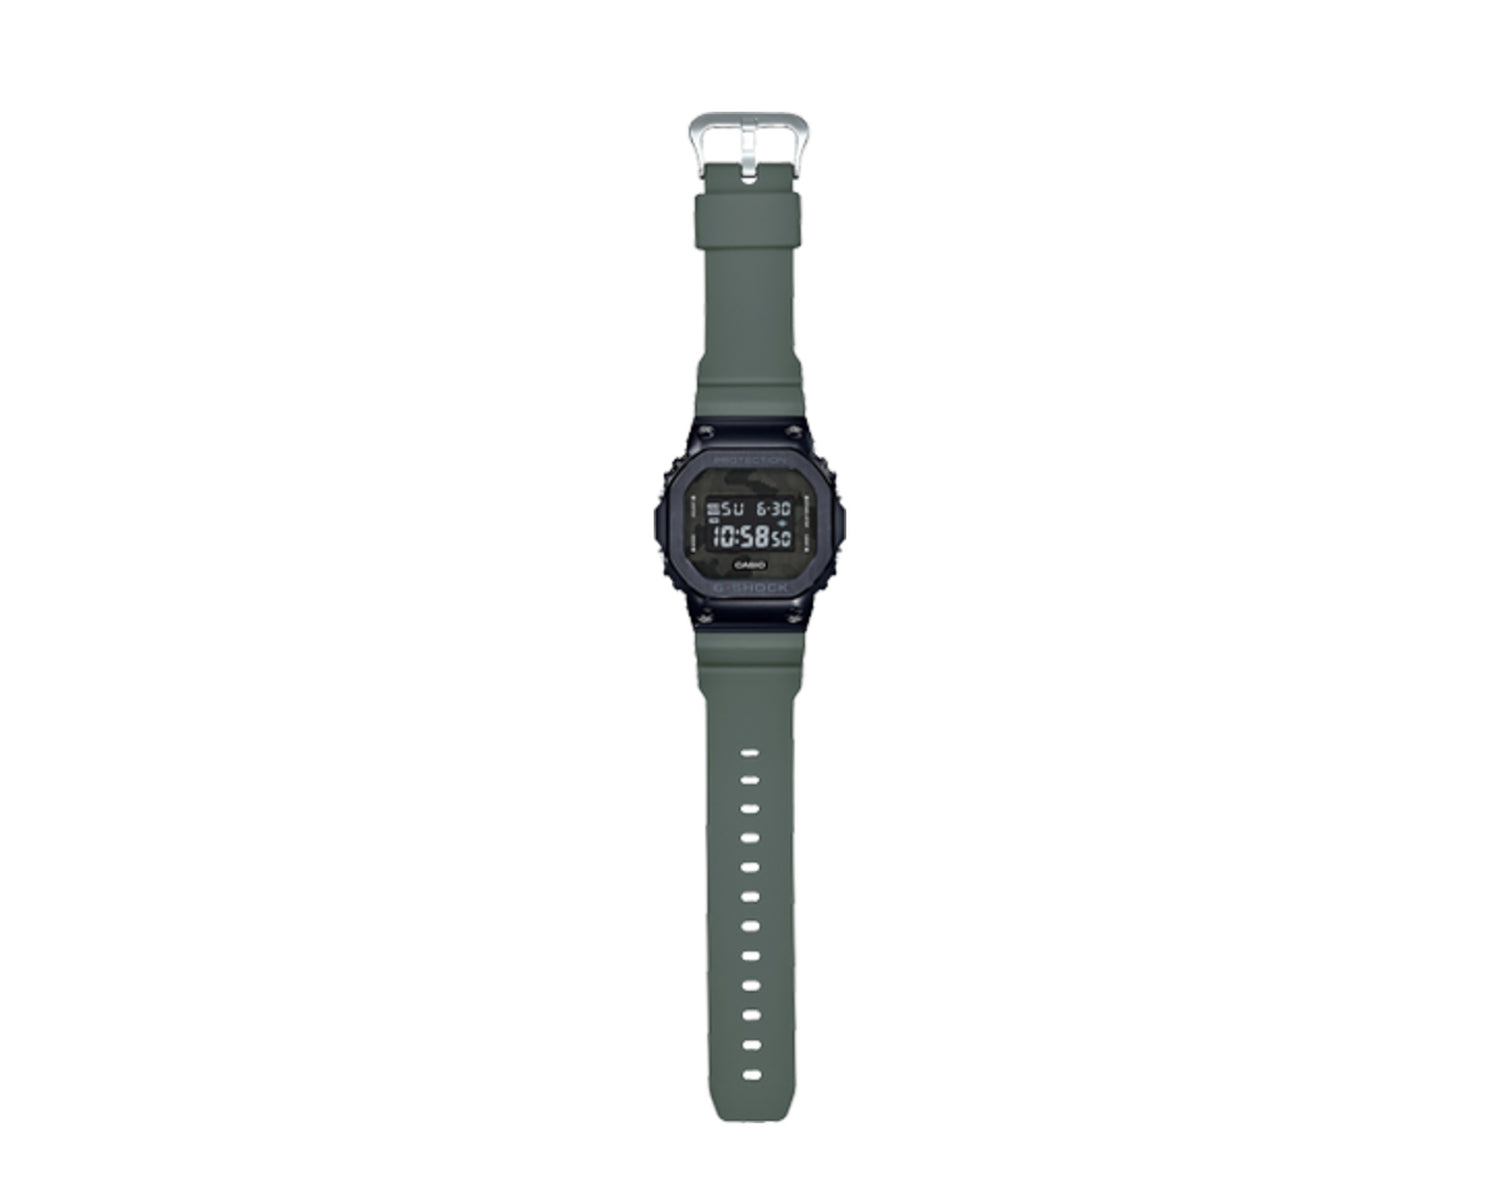 Casio G-Shock GM5600 Digital Metal and Resin Men's Watch